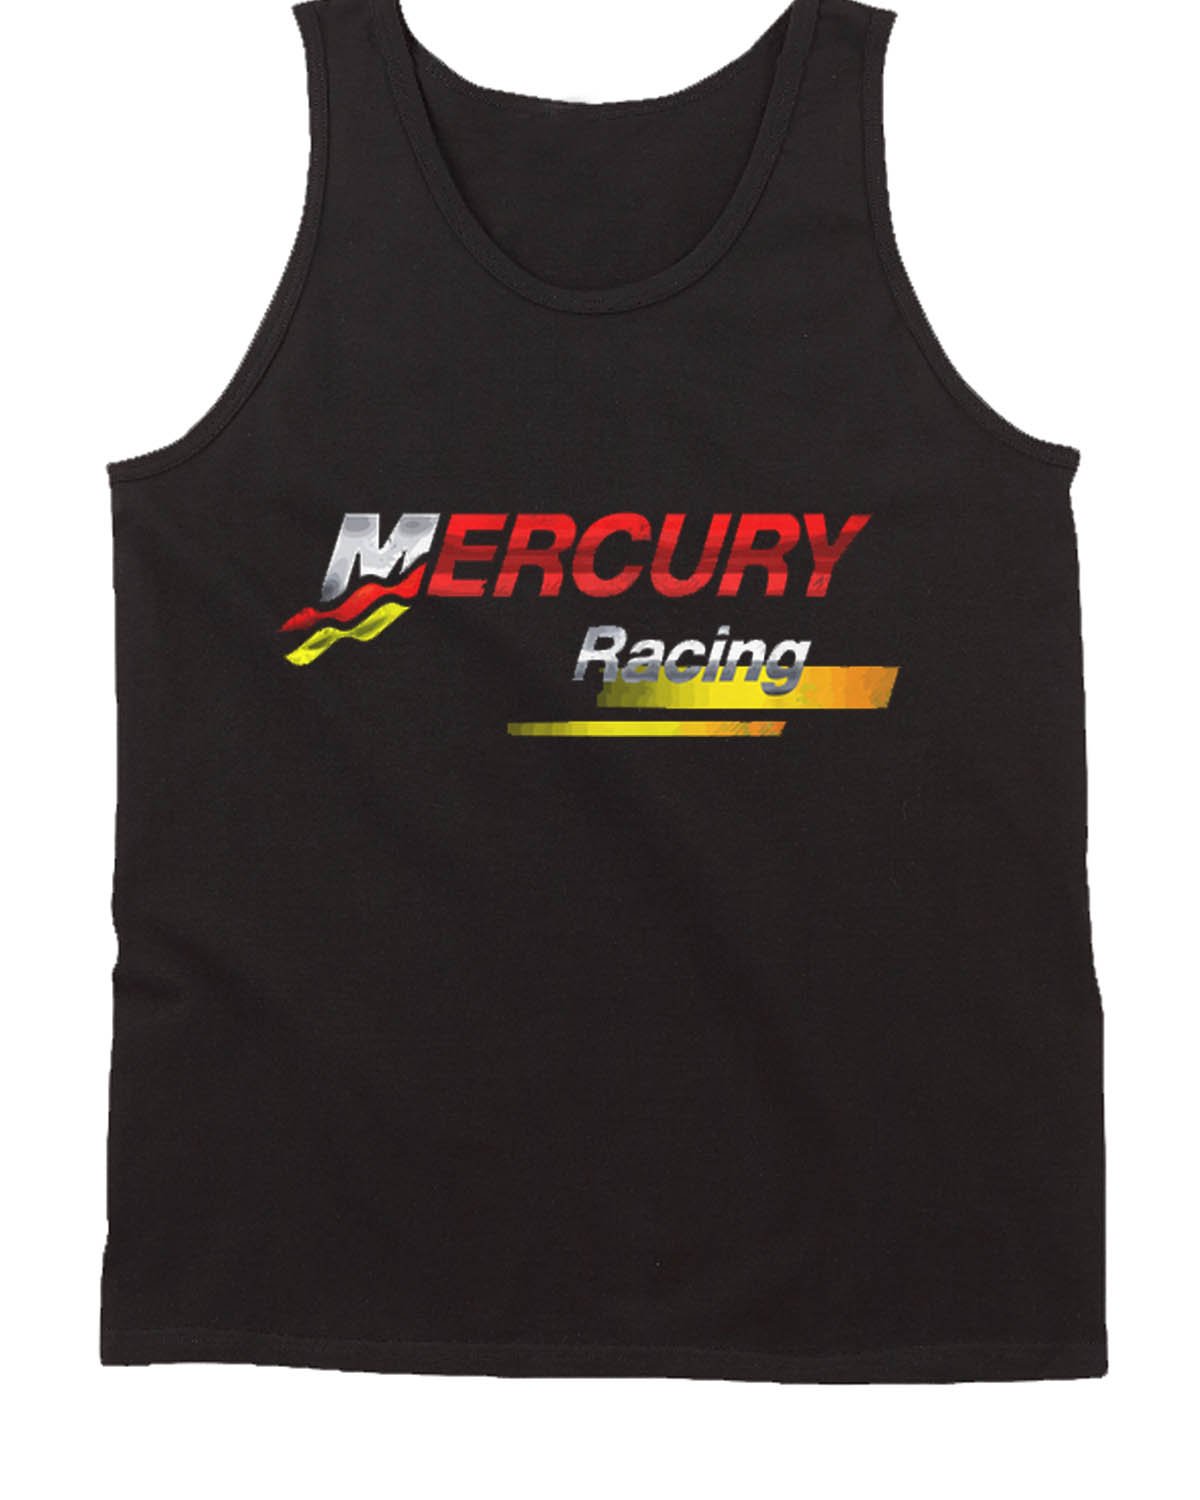 Mercury Racing Tanktop Shirts